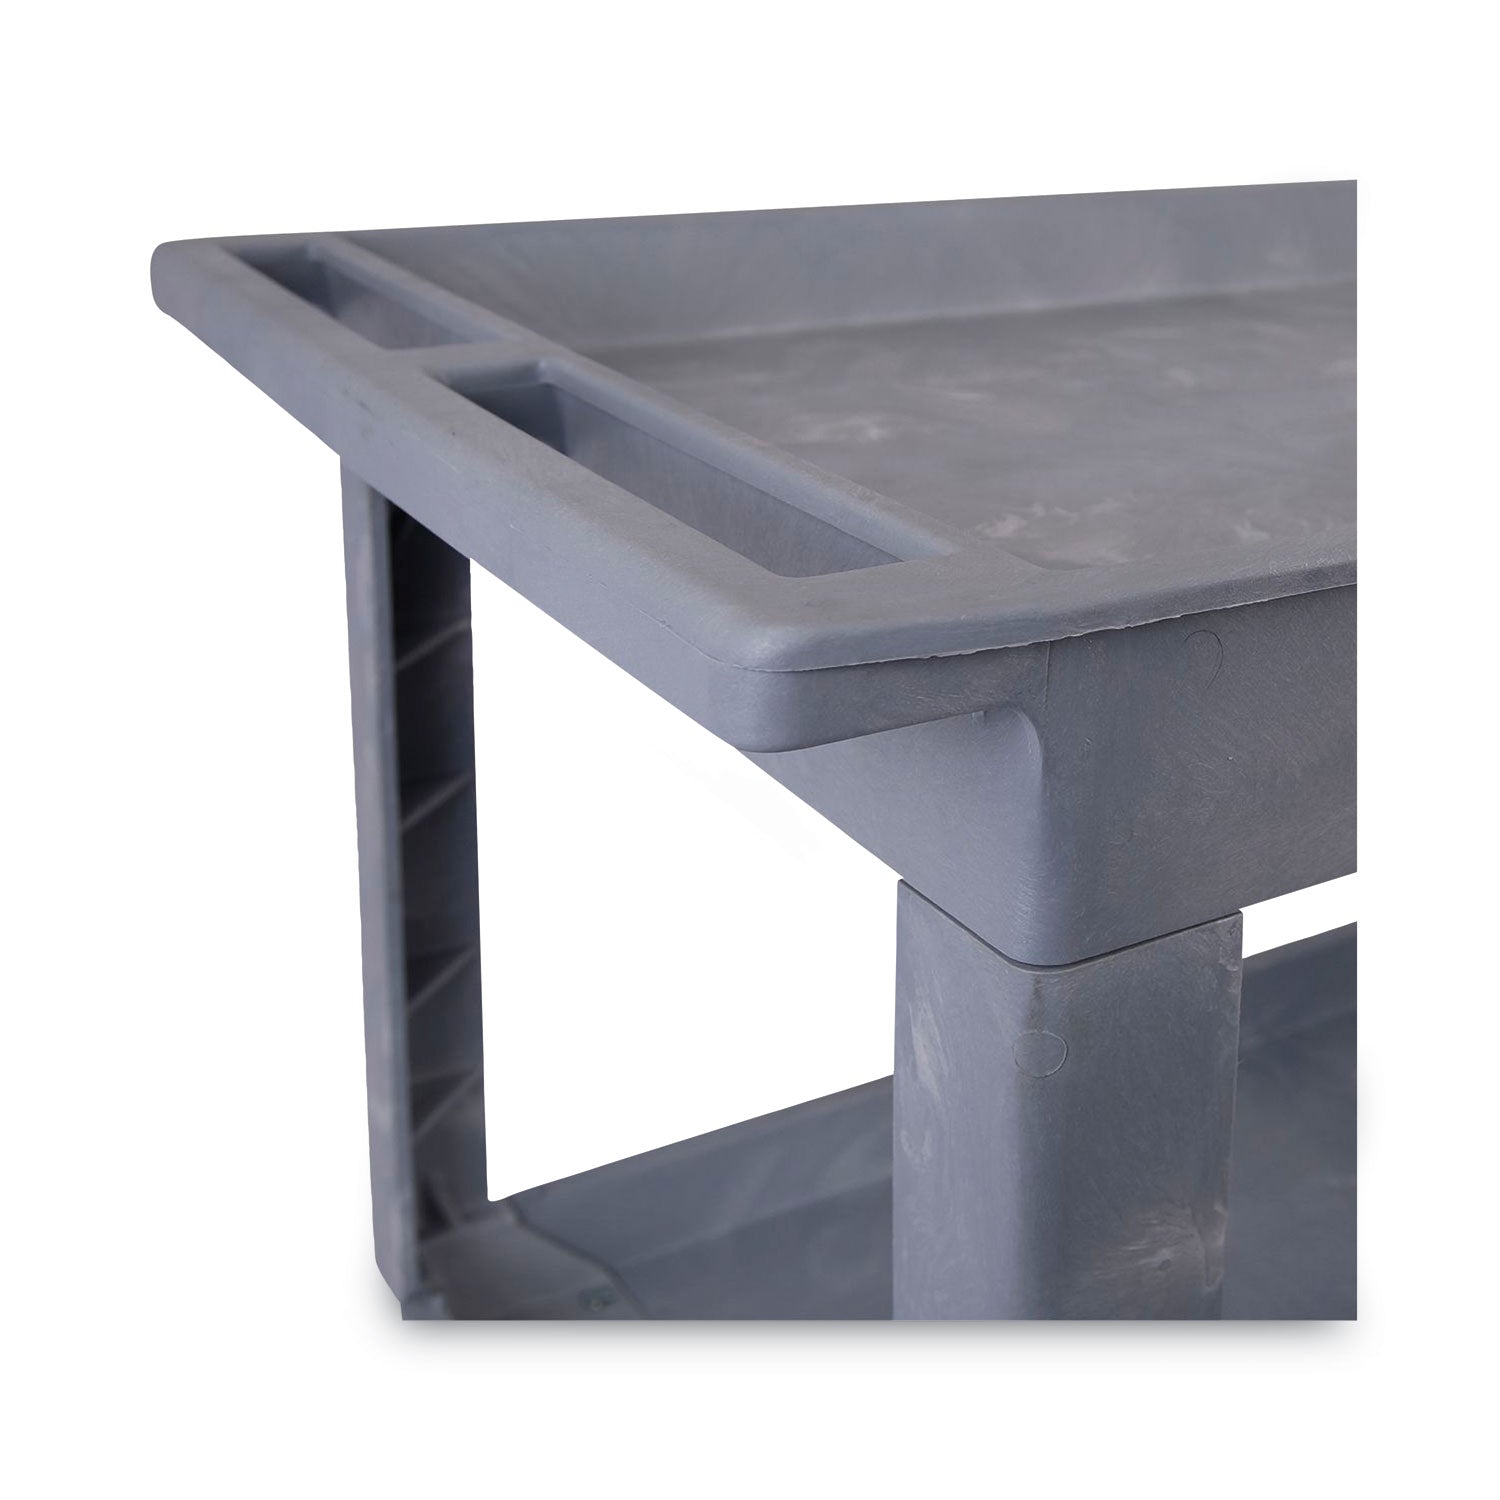 two-shelf-utility-cart-plastic-2-shelves-300-lb-capacity-24-x-40-x-315-gray_bwk4024ucgra - 4